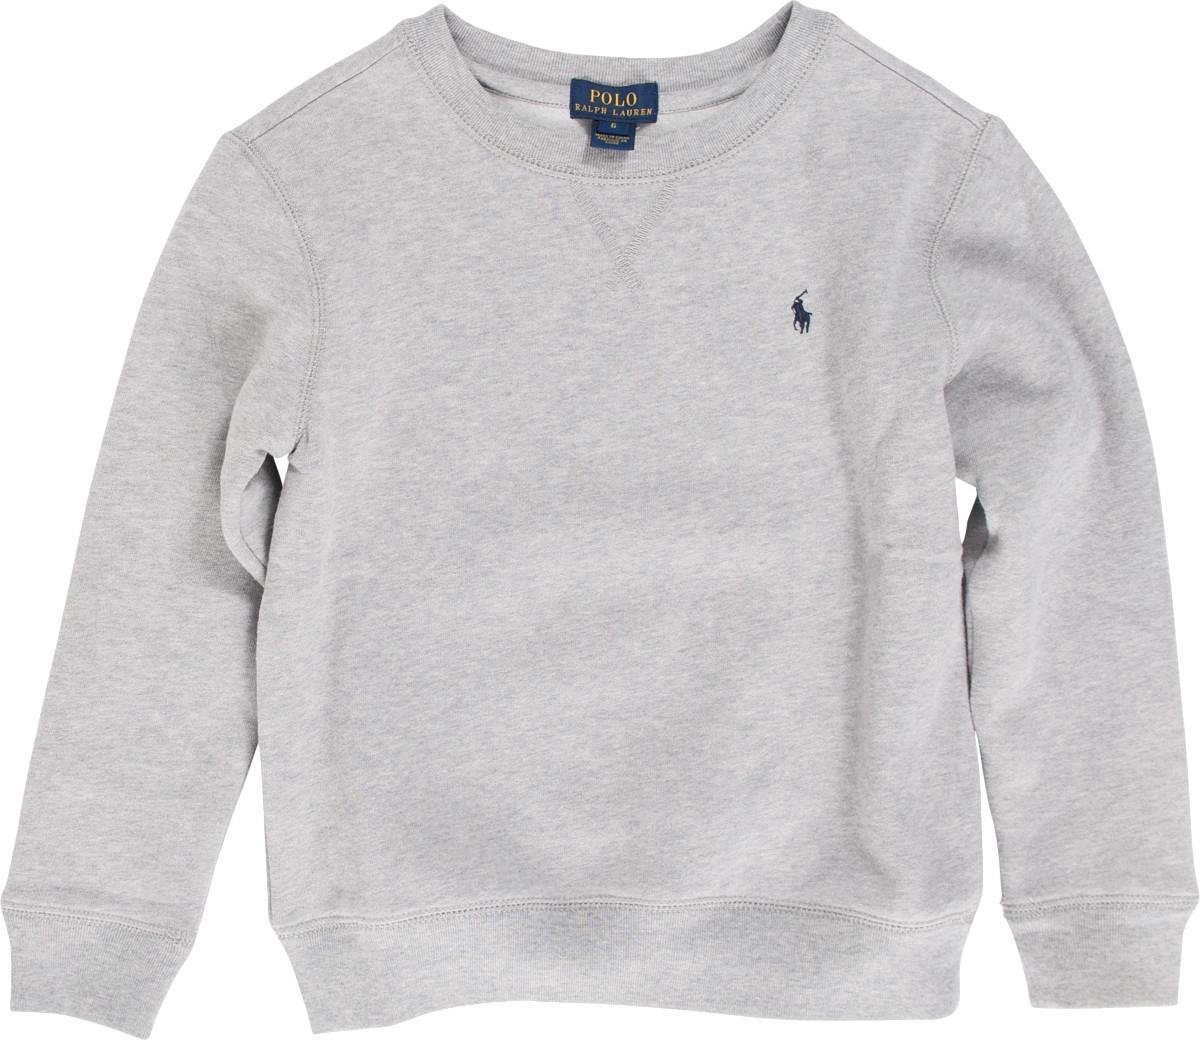 Absurd Tijdig Kaliber Ralph Lauren Unisex Sweater - Grijs - Maat 74 | bol.com